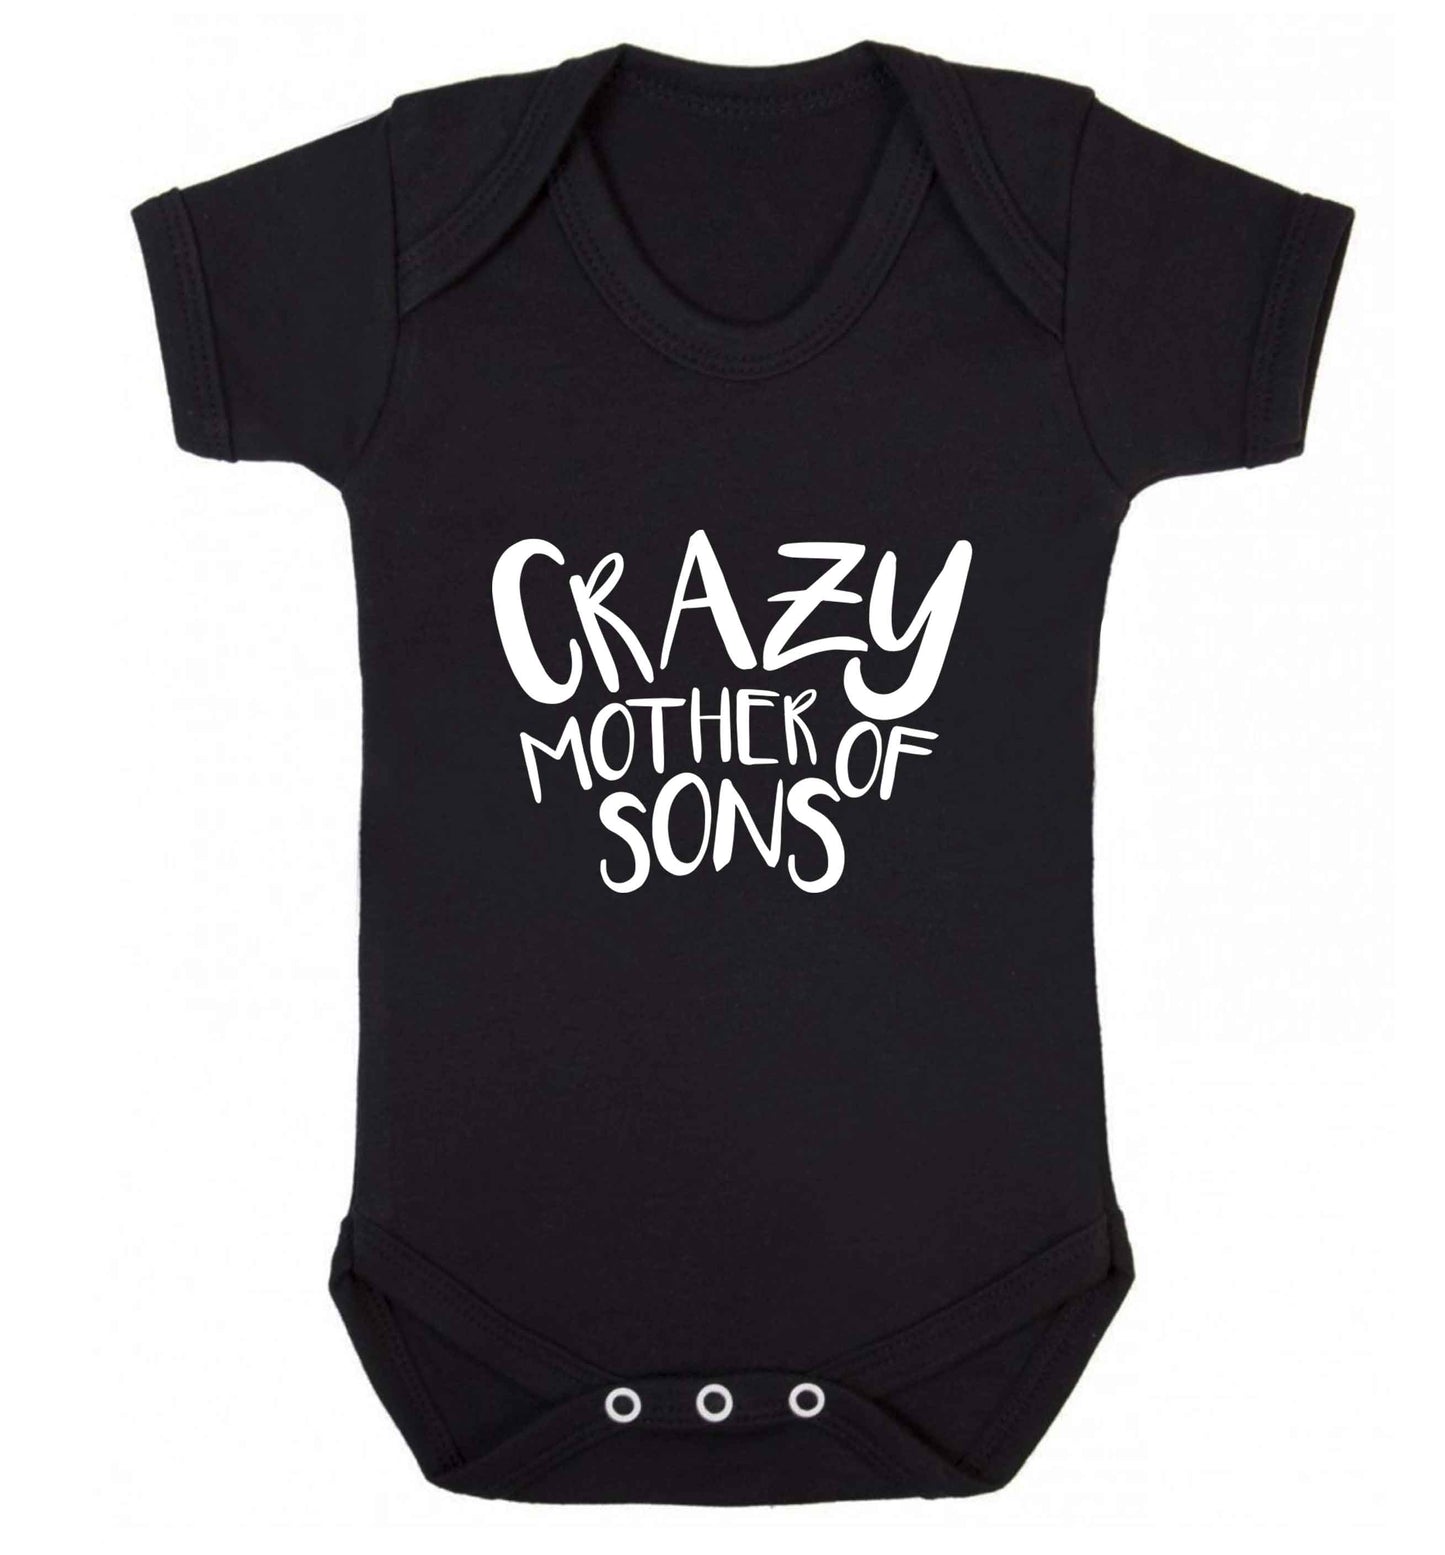 Crazy mother of sons baby vest black 18-24 months